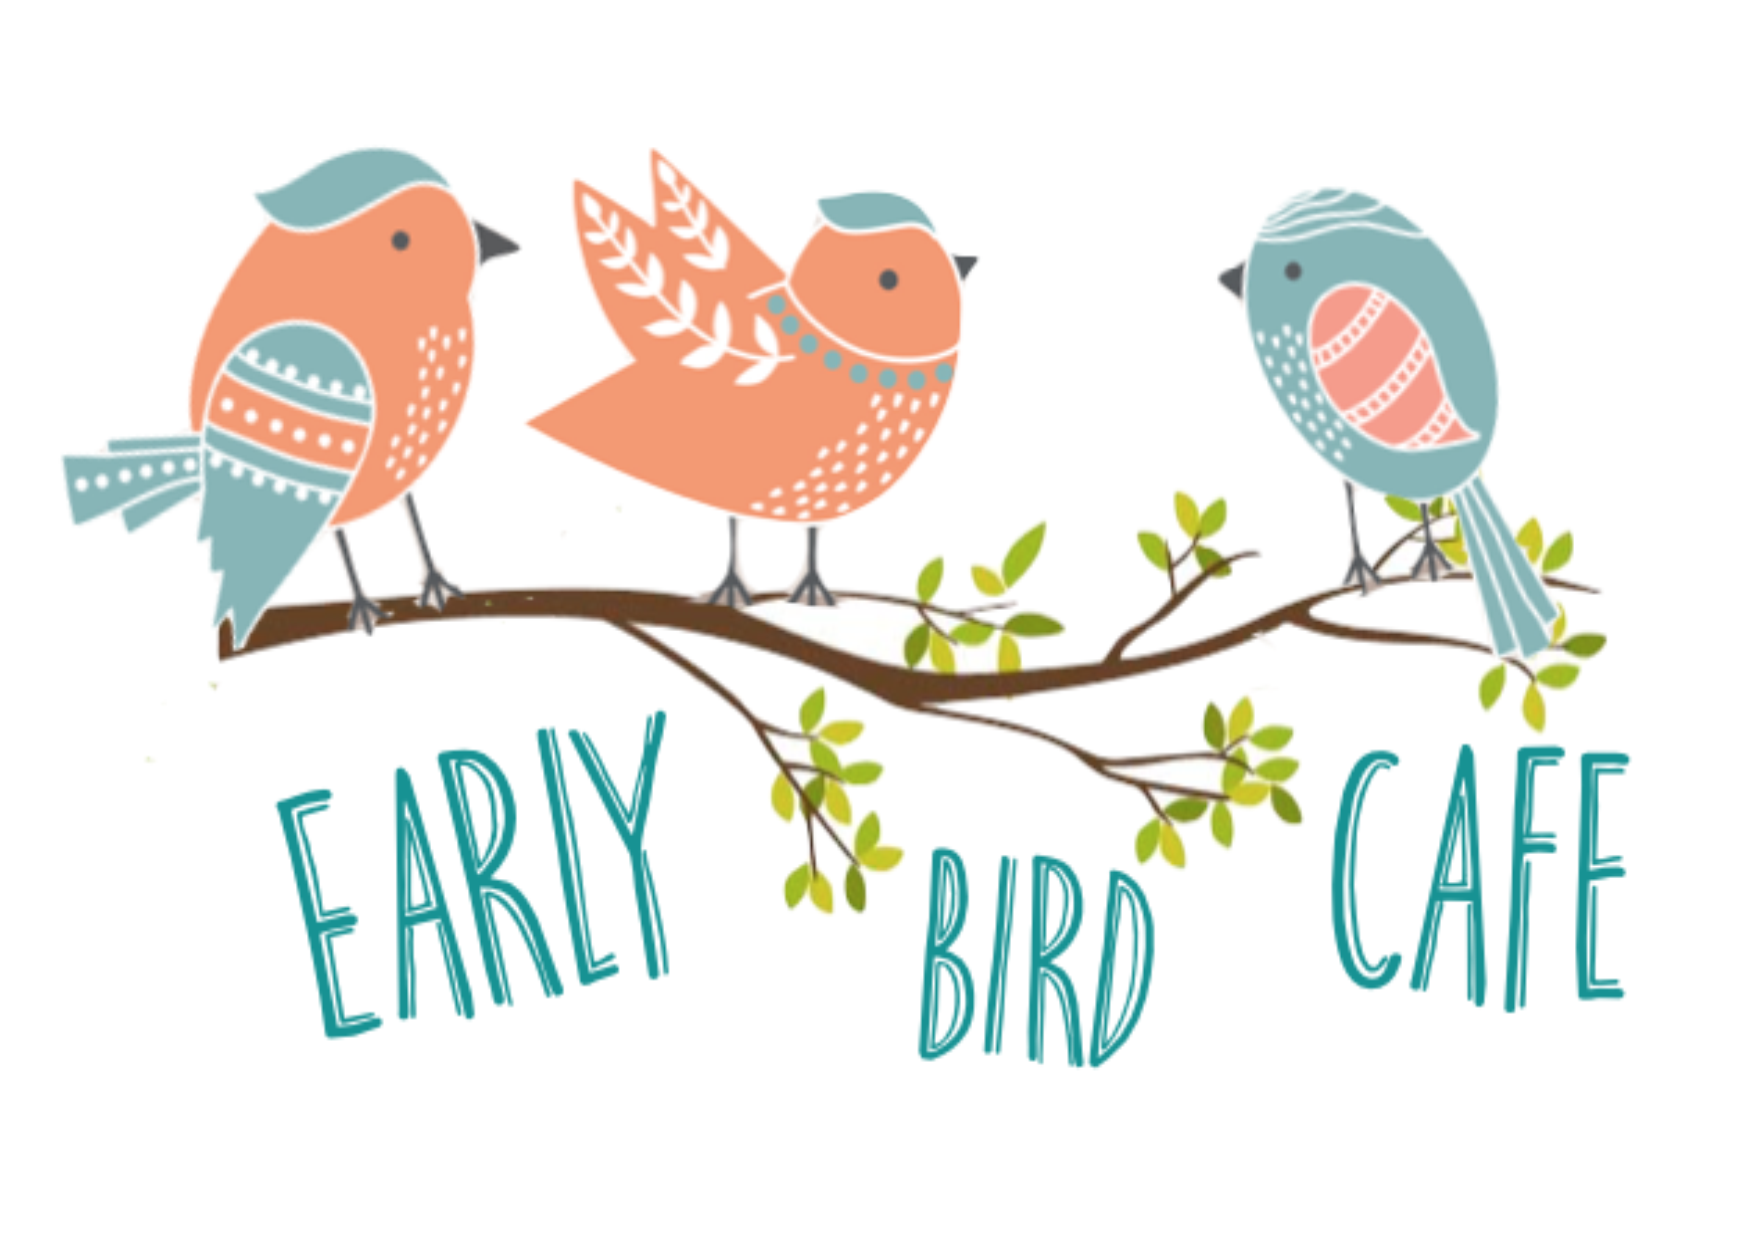 Early Bird cafe new 3 bird log